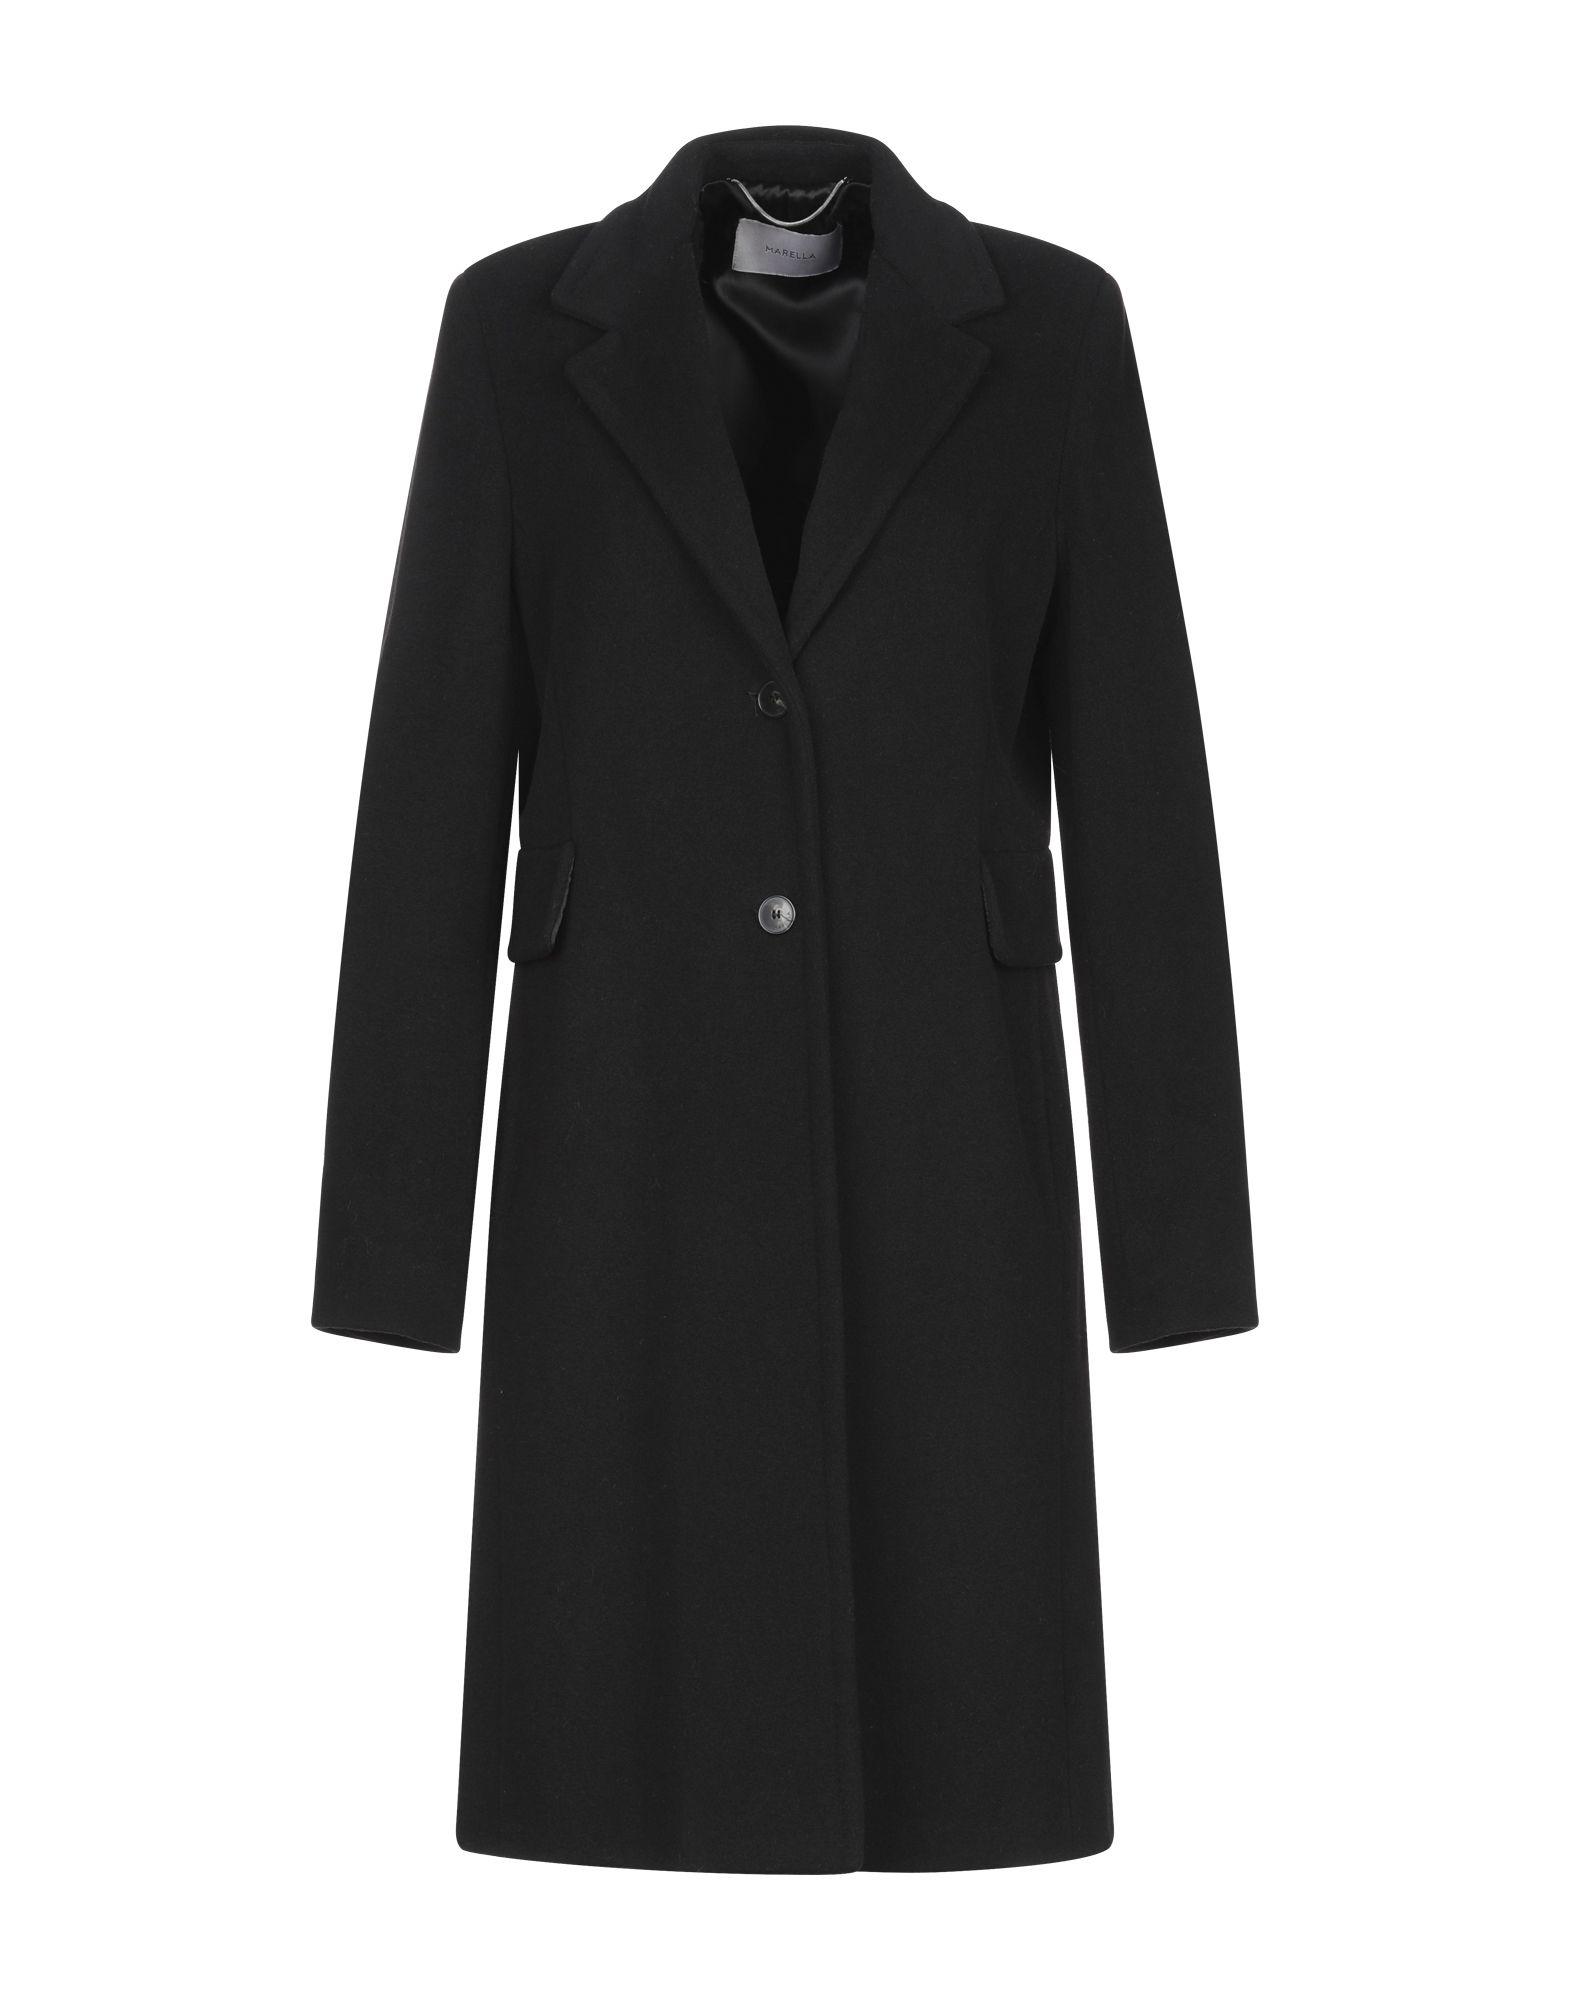 Marella Wool Coat in Black - Lyst